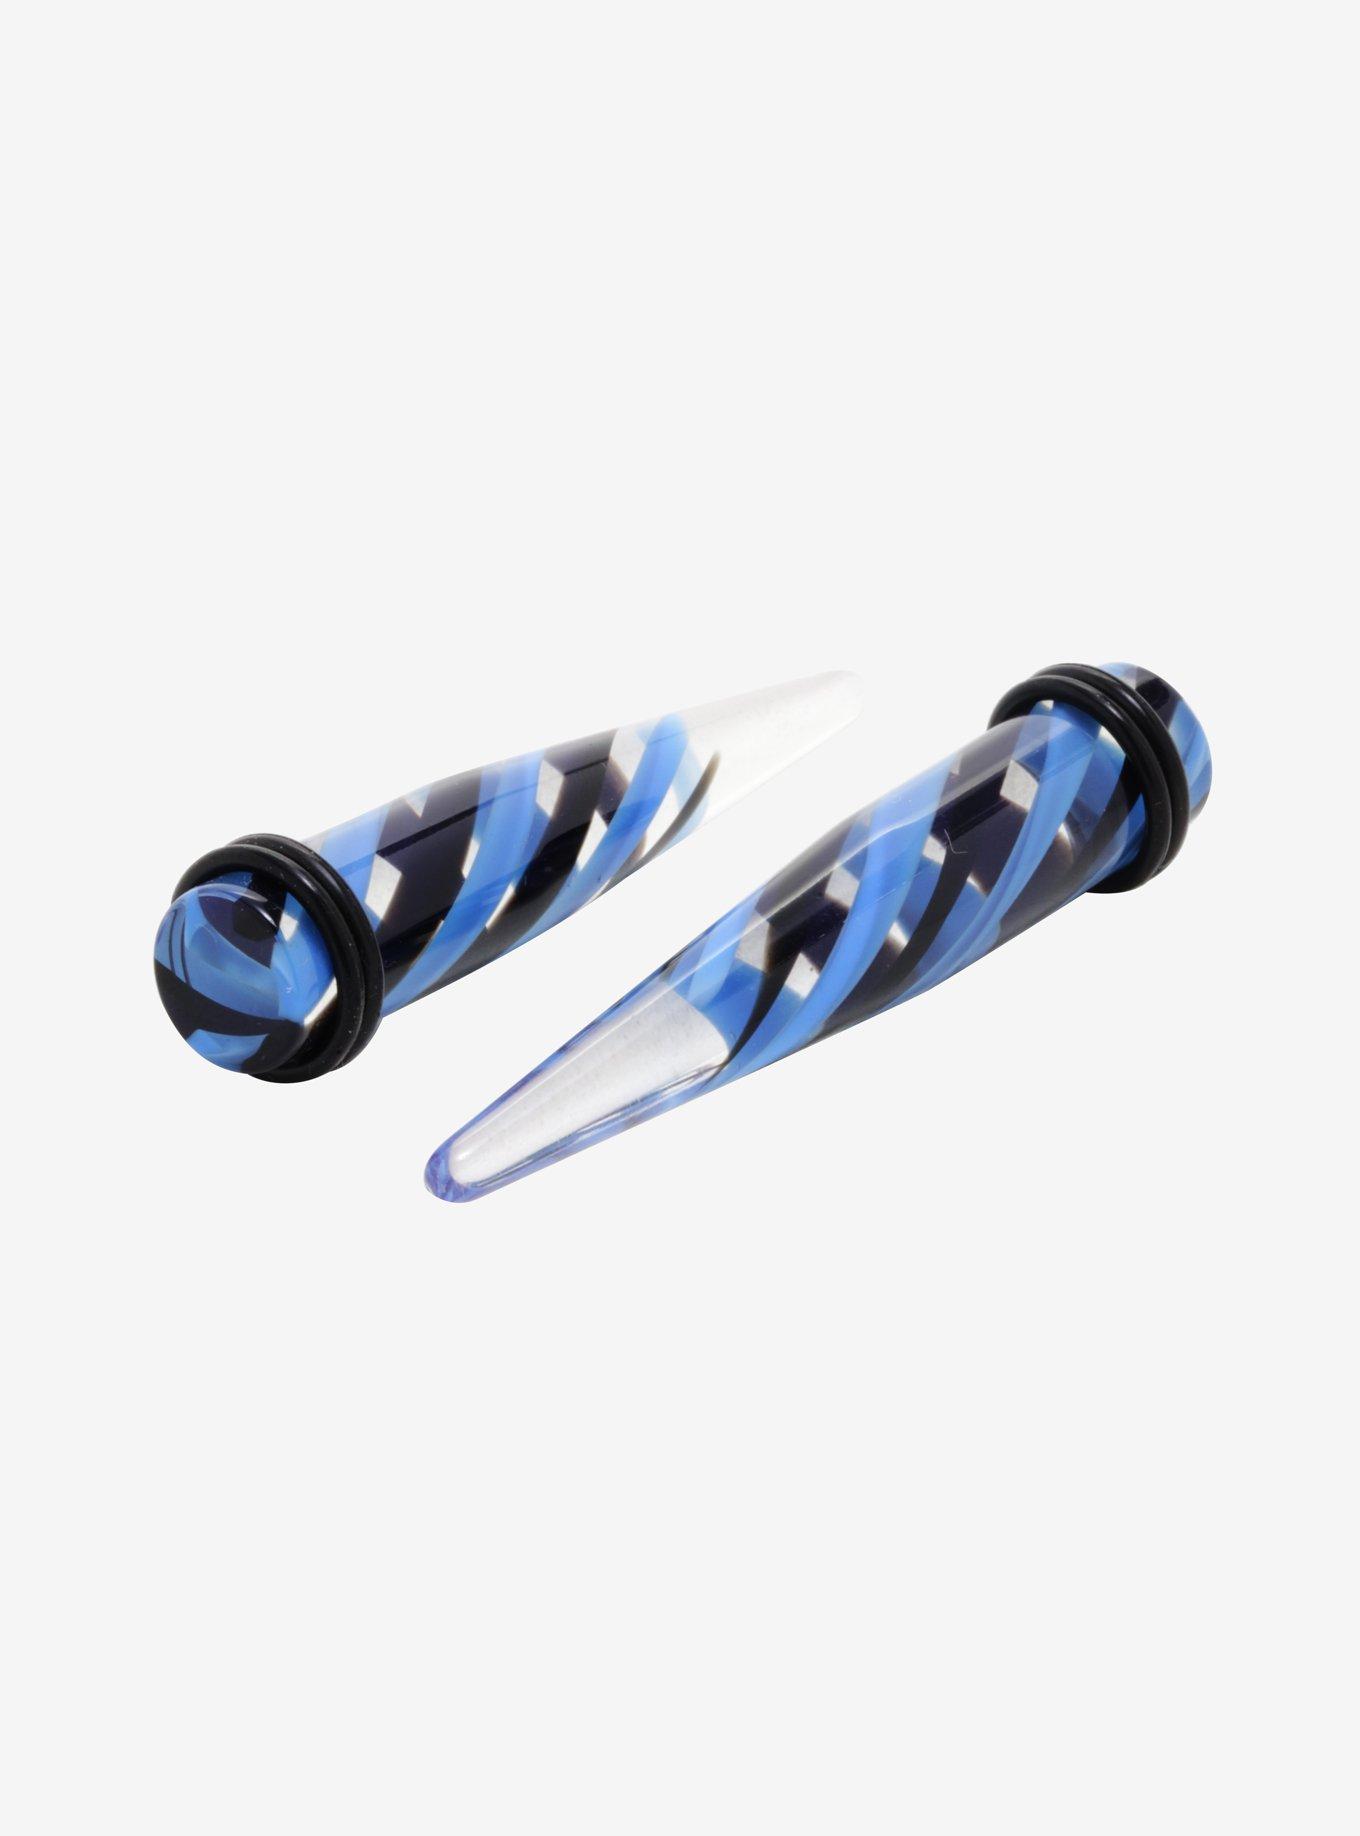 Acrylic Blue & Black Twist Taper 2 Pack, MULTI, hi-res